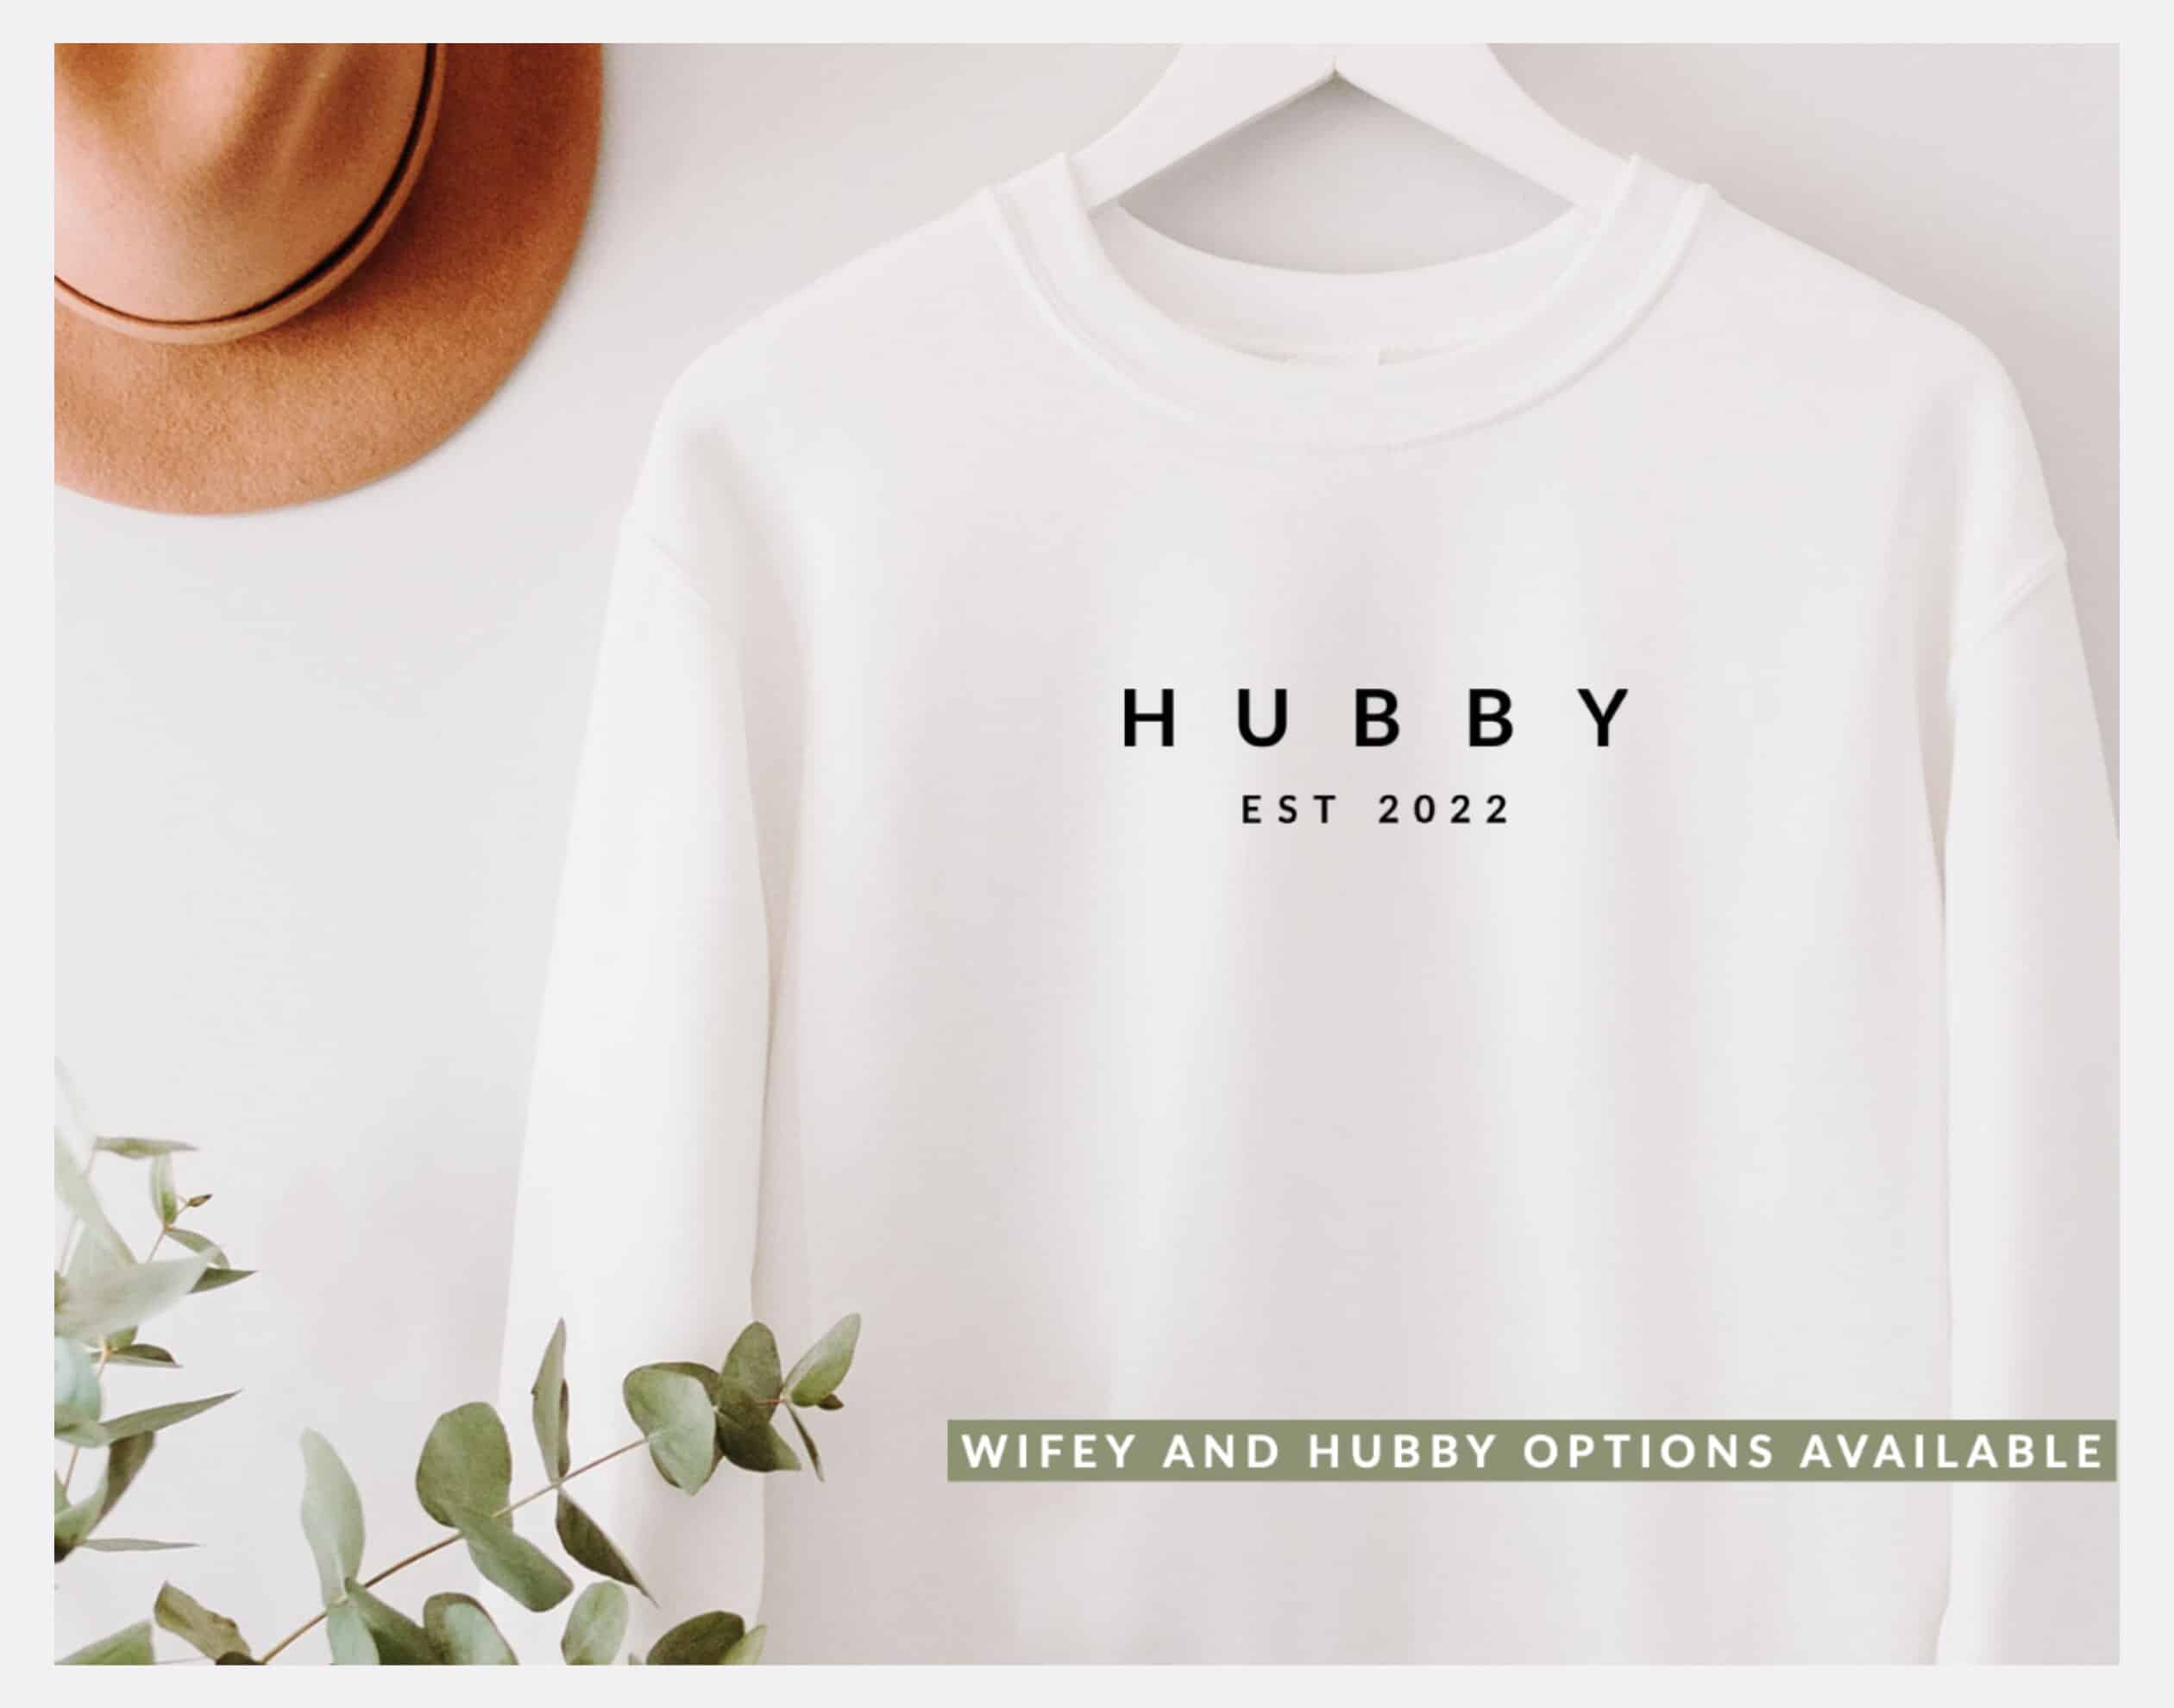 Bridal Shower Gift Bride Sweatshirt Wife Shirt Sweatshirt For Wife Gift For Wife Bride-To-Be Sweatshirt Wifey Sweatshirt